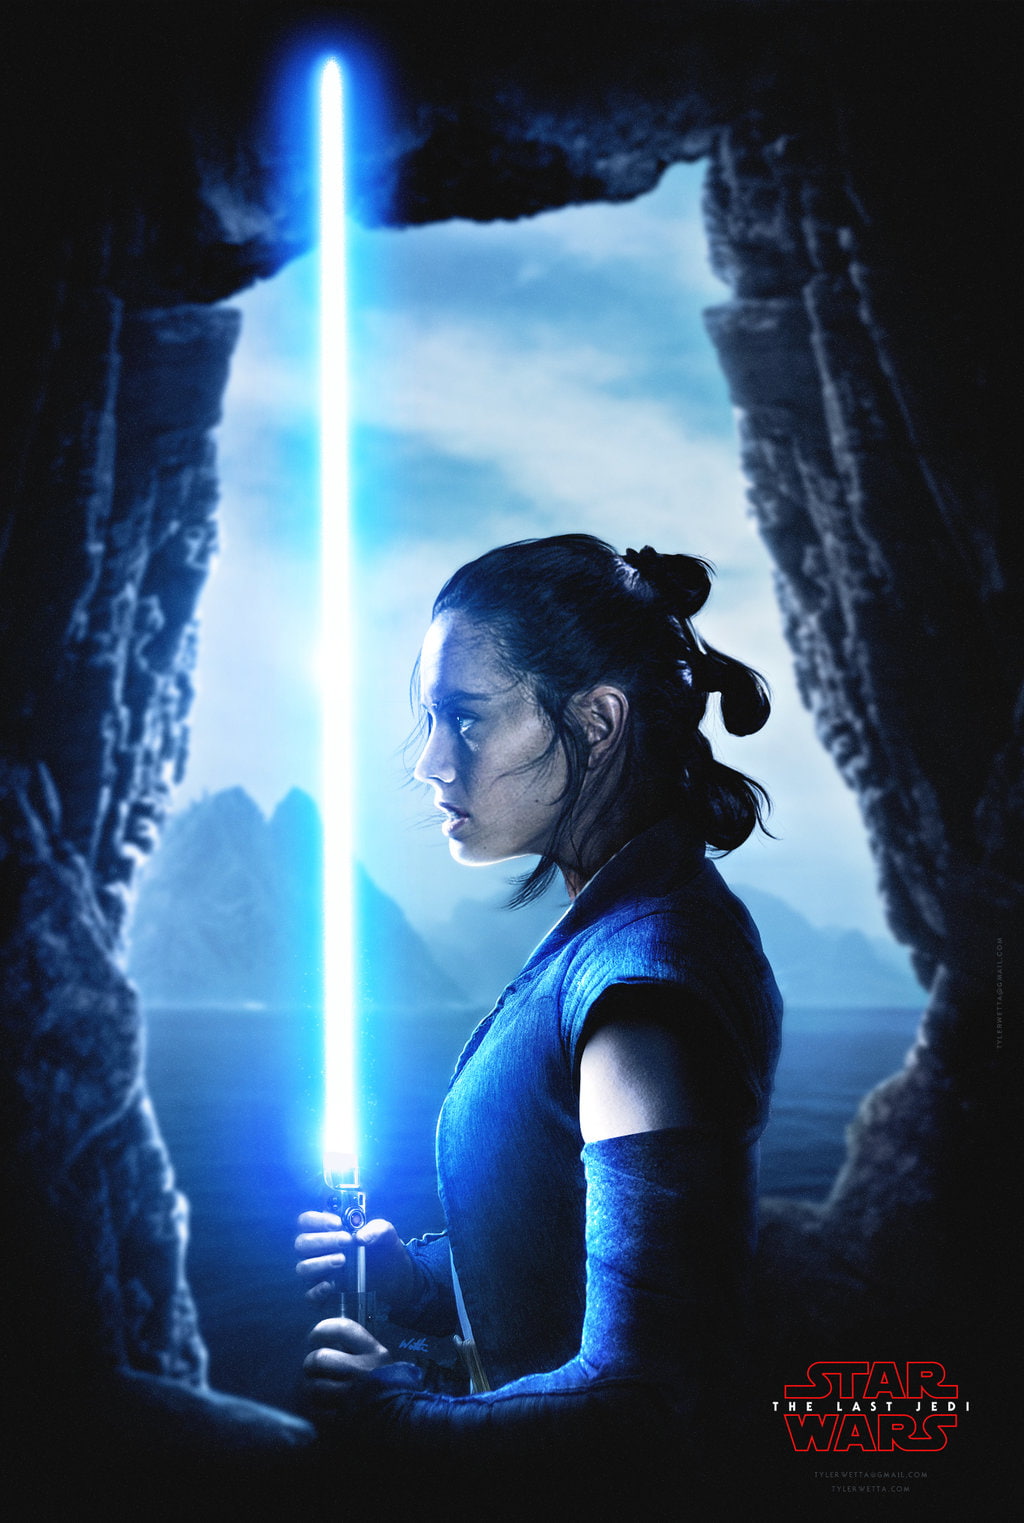 Star Wars: The Last Jedi, Rey (from Star Wars), lightsaber